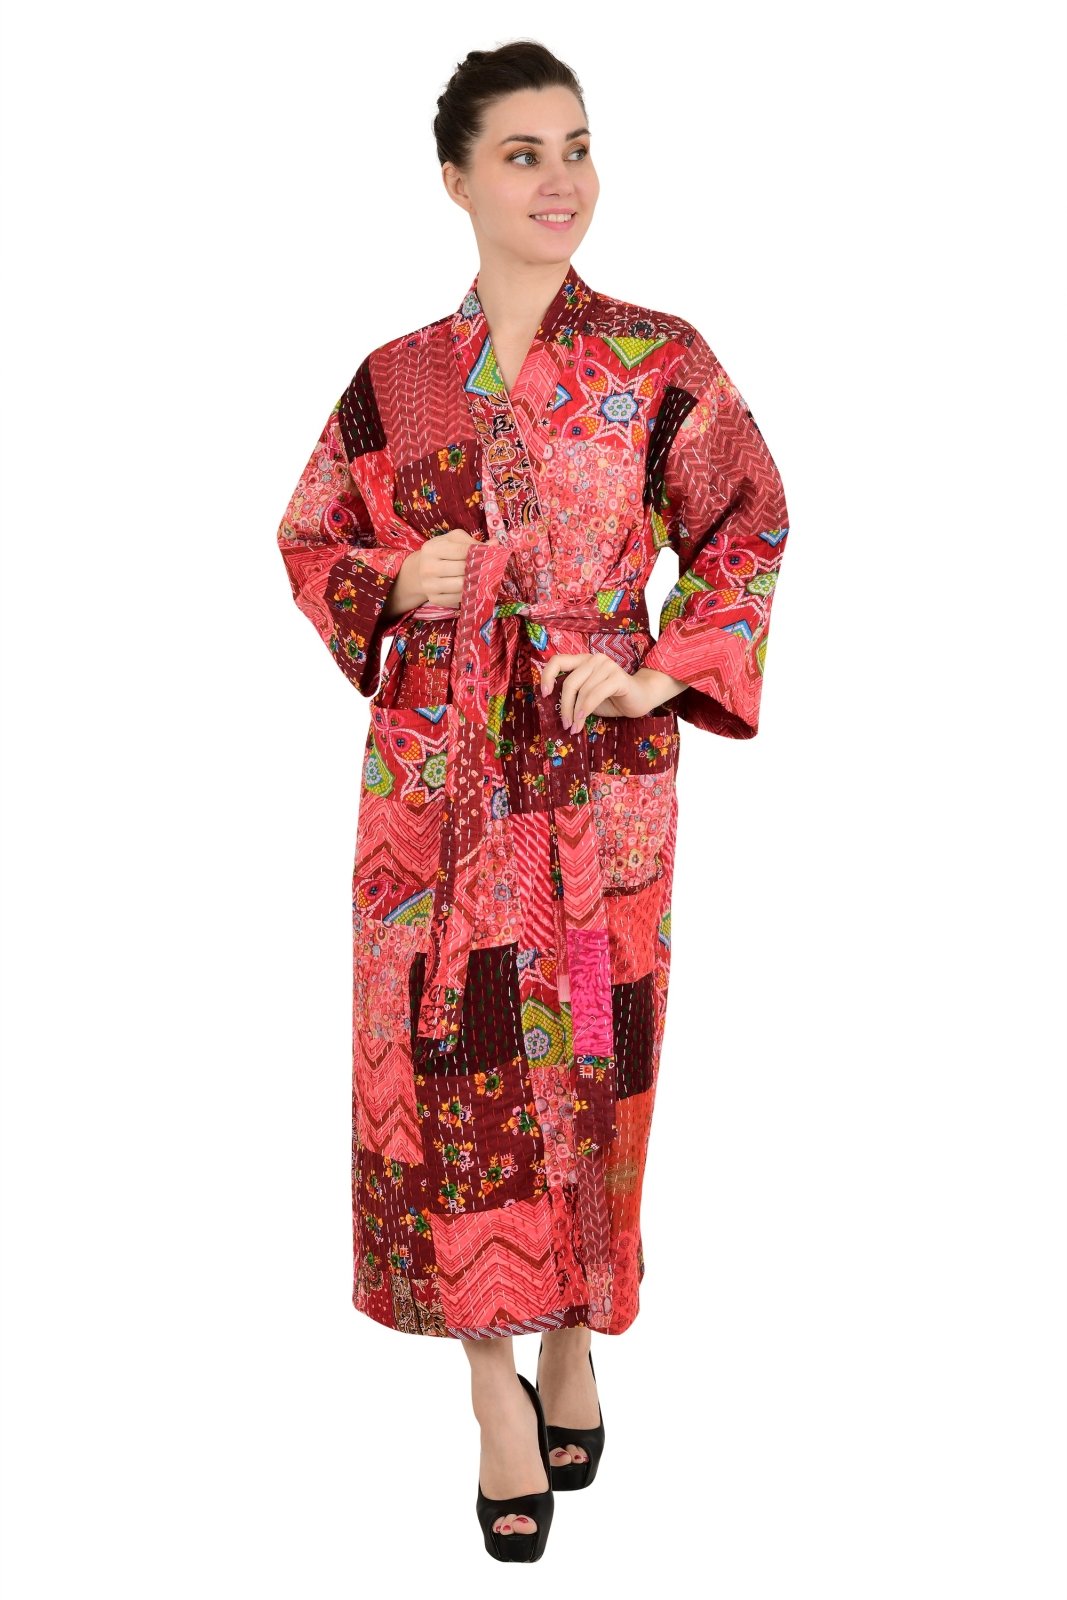 Kantha Pure Cotton Reversible Long Kimono Women Unique Patchwork Red Burst - The Eastern Loom